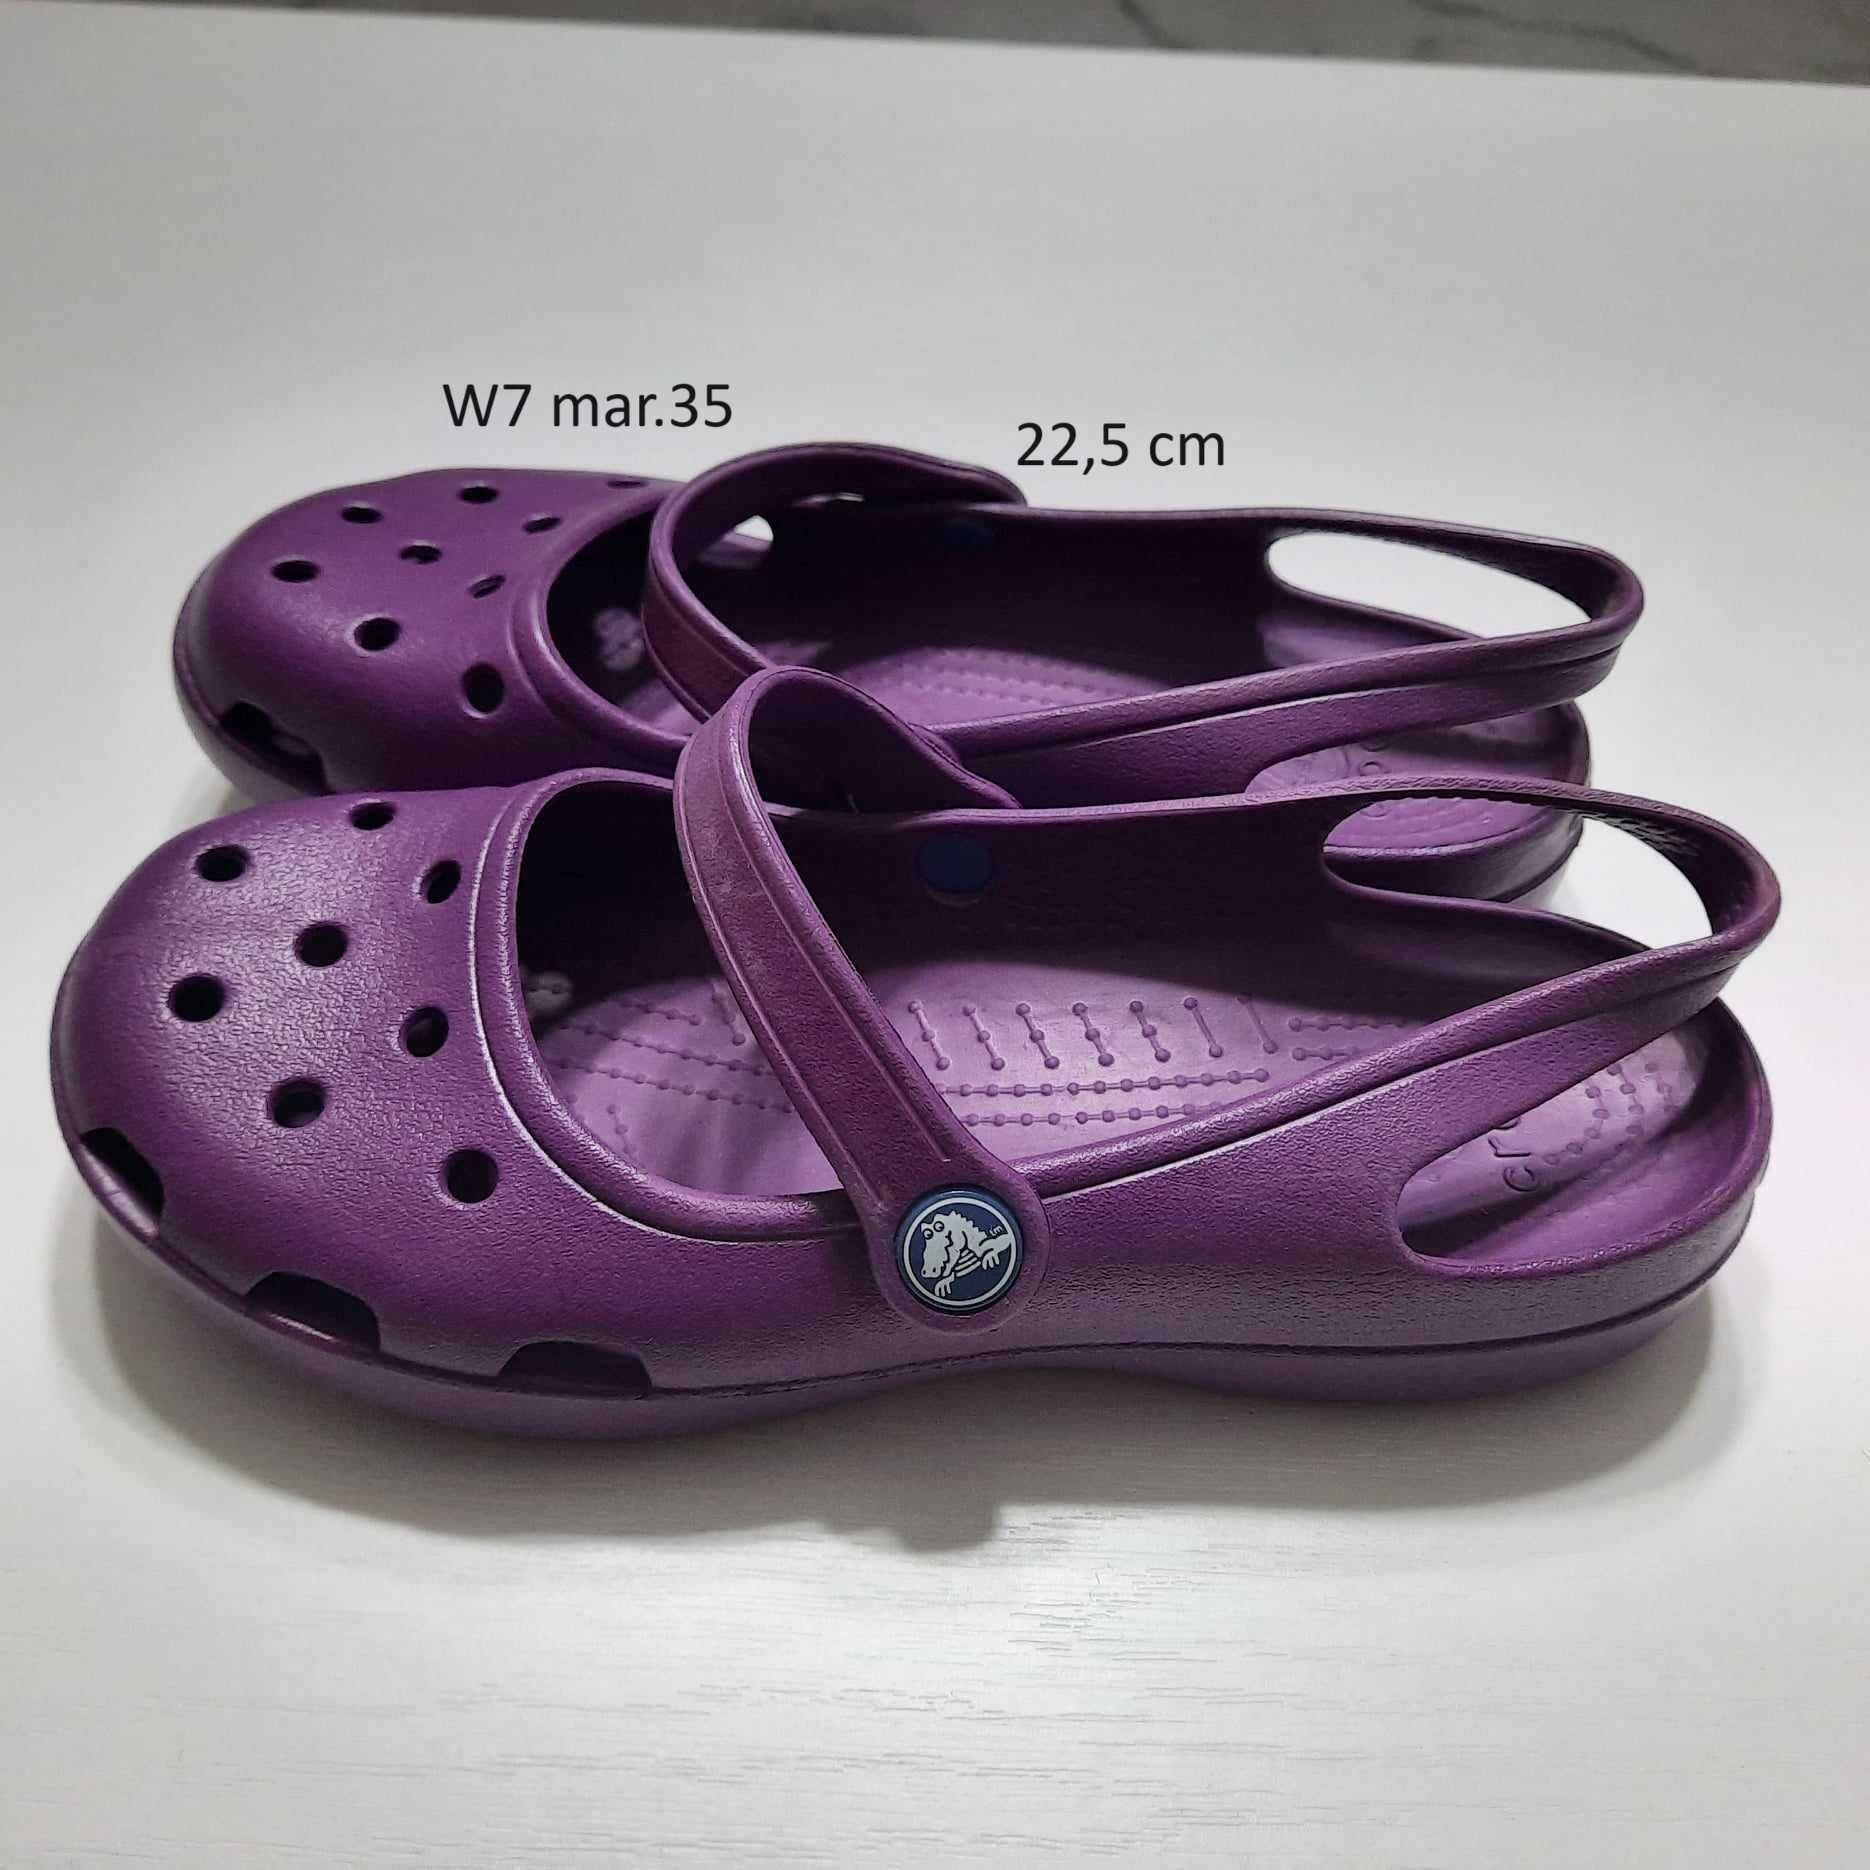 Sandale Crocs W7- mar.35